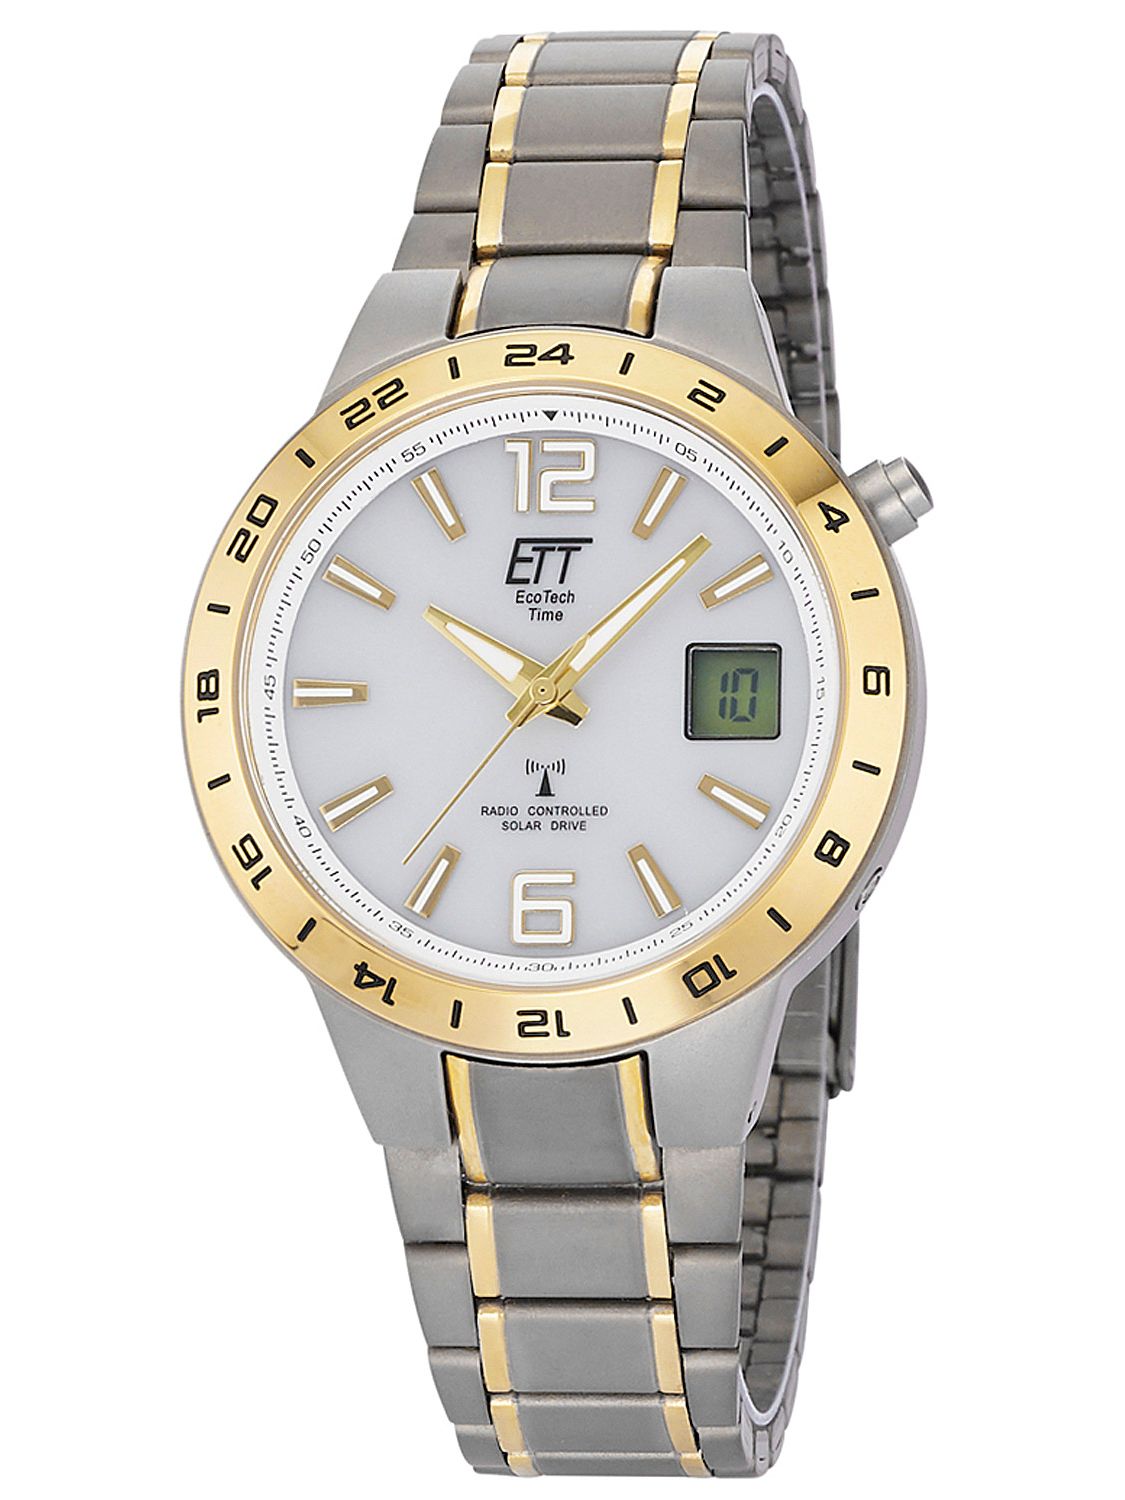 ETT Eco Tech Time Radio-Controlled Solar Watch Titanium Two-Colour 